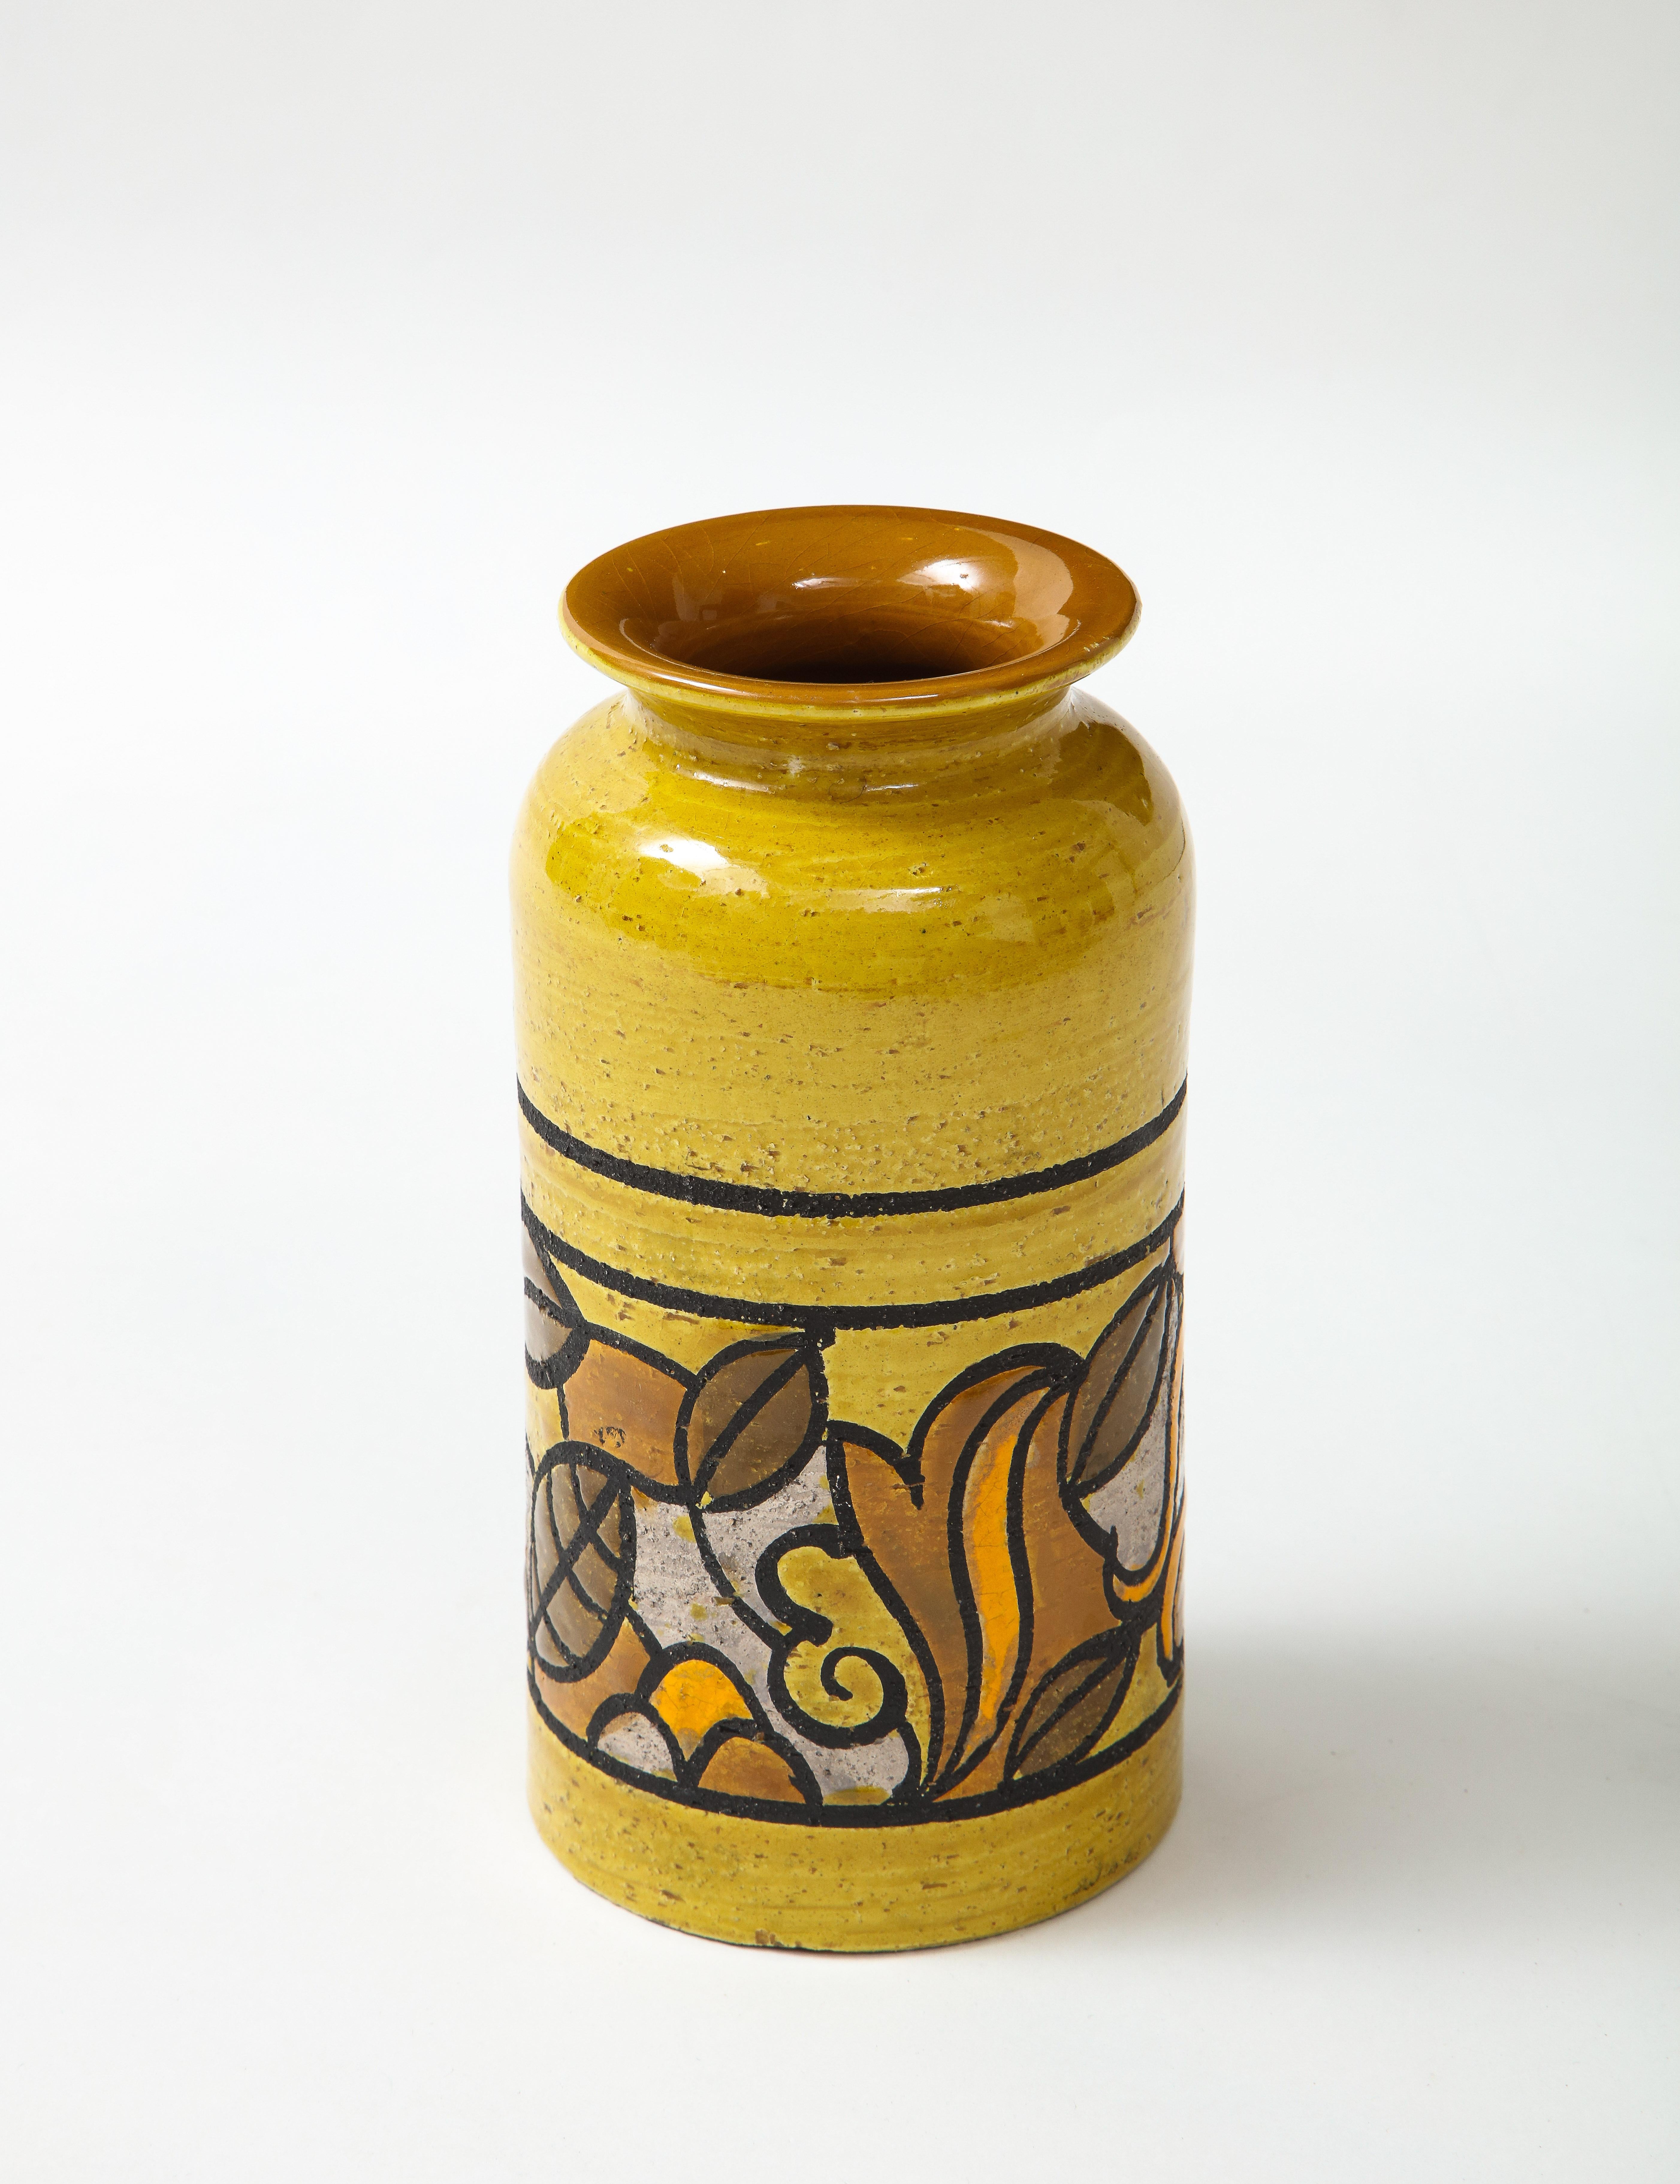 Aldo Londi Bitossi Ochre Glazed Box, Vase Set For Sale 1